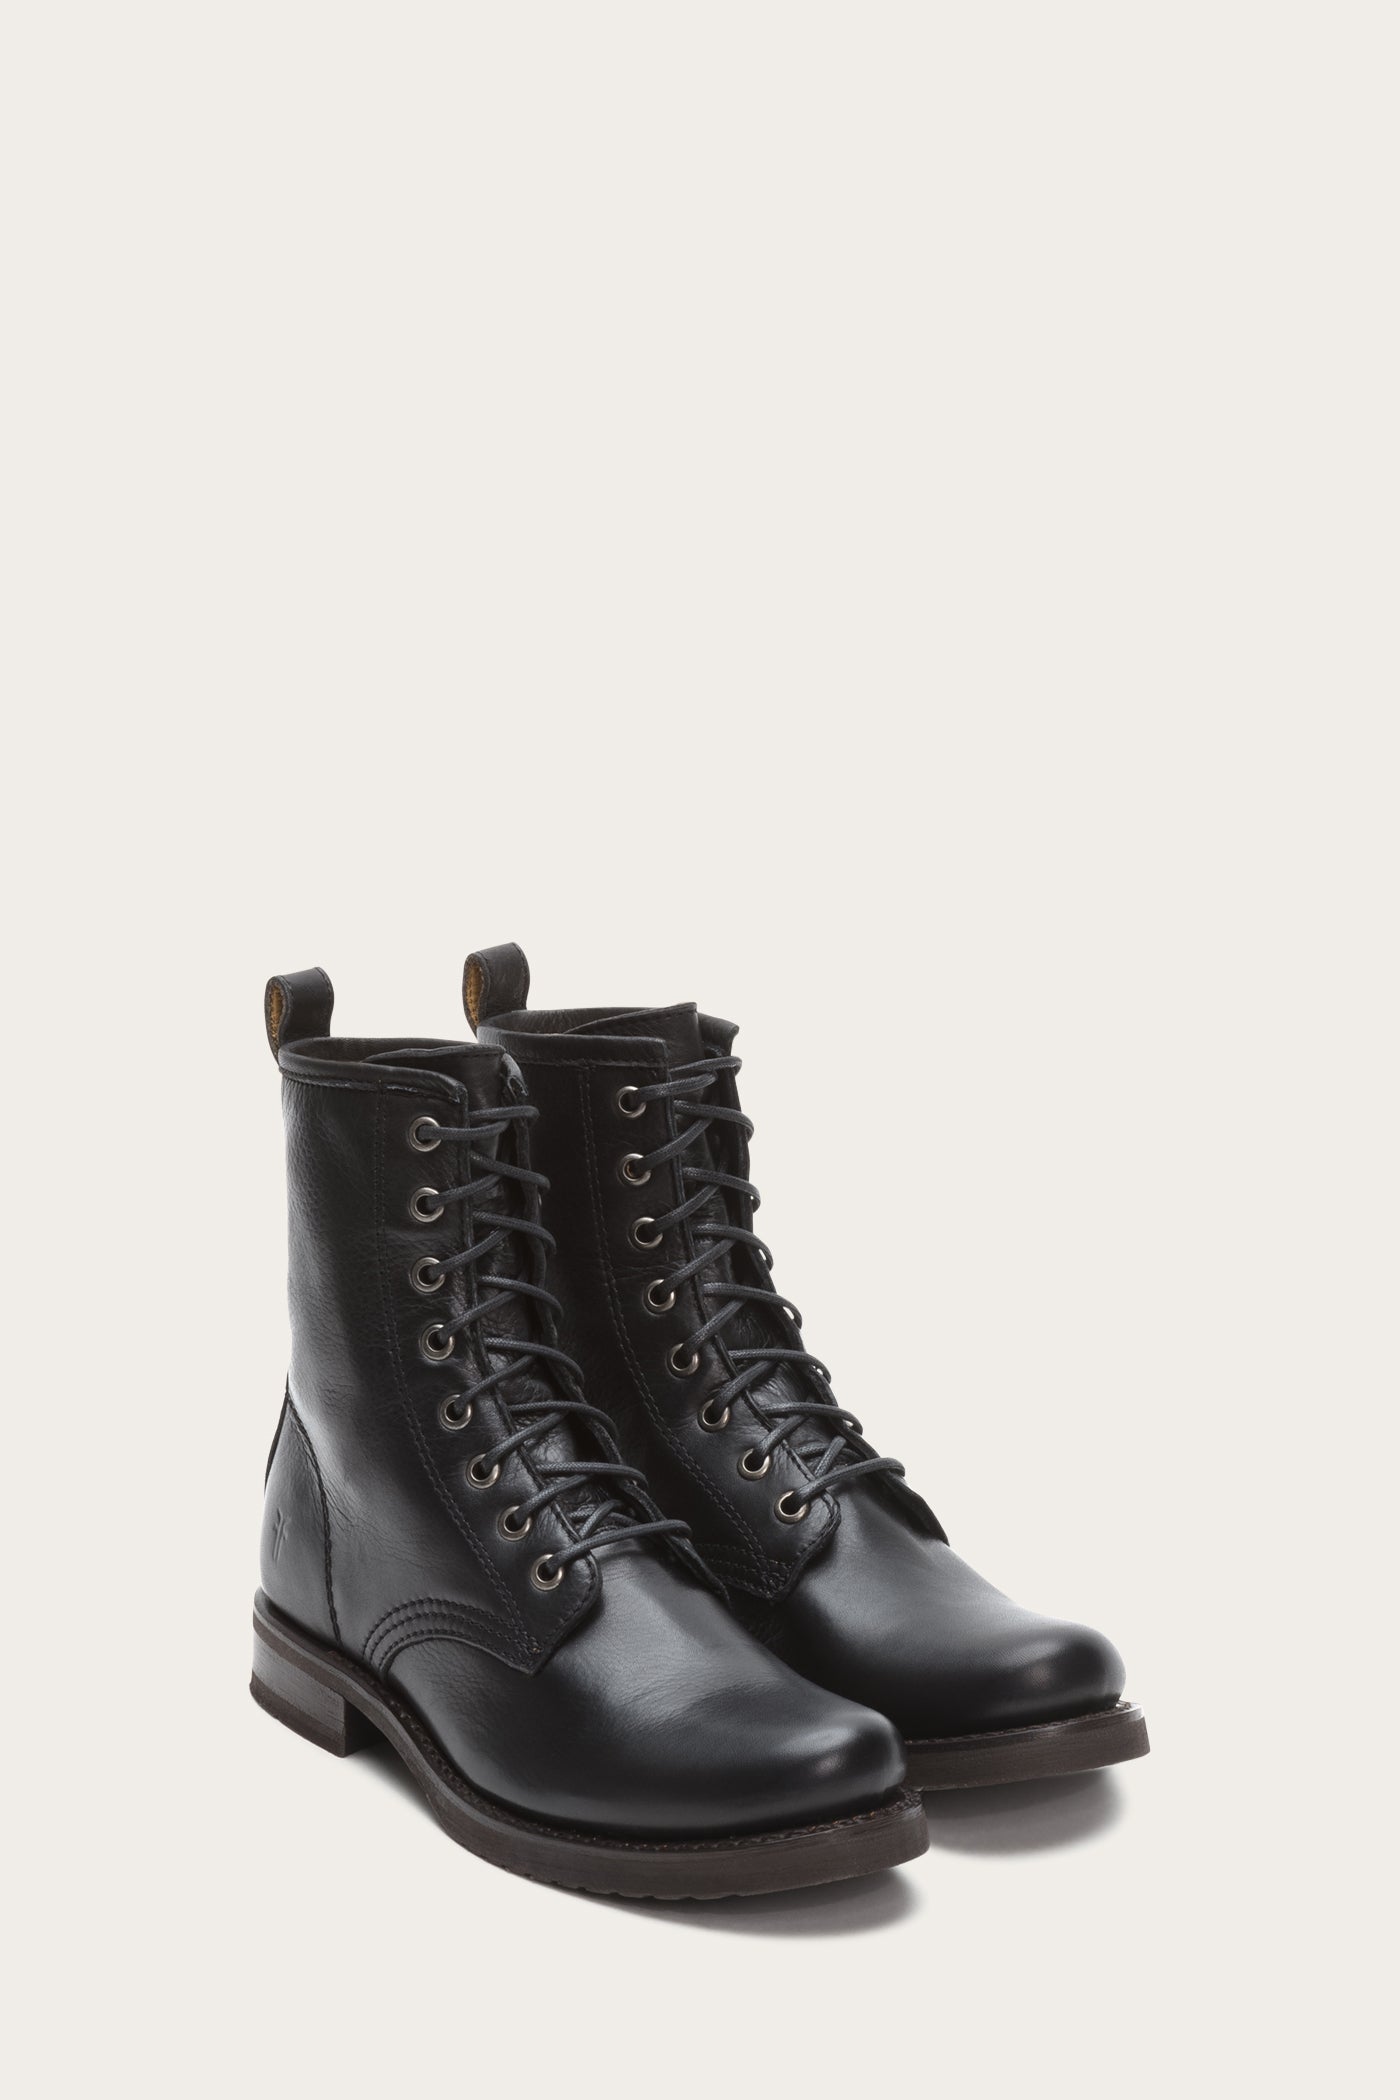 frye shoe boots